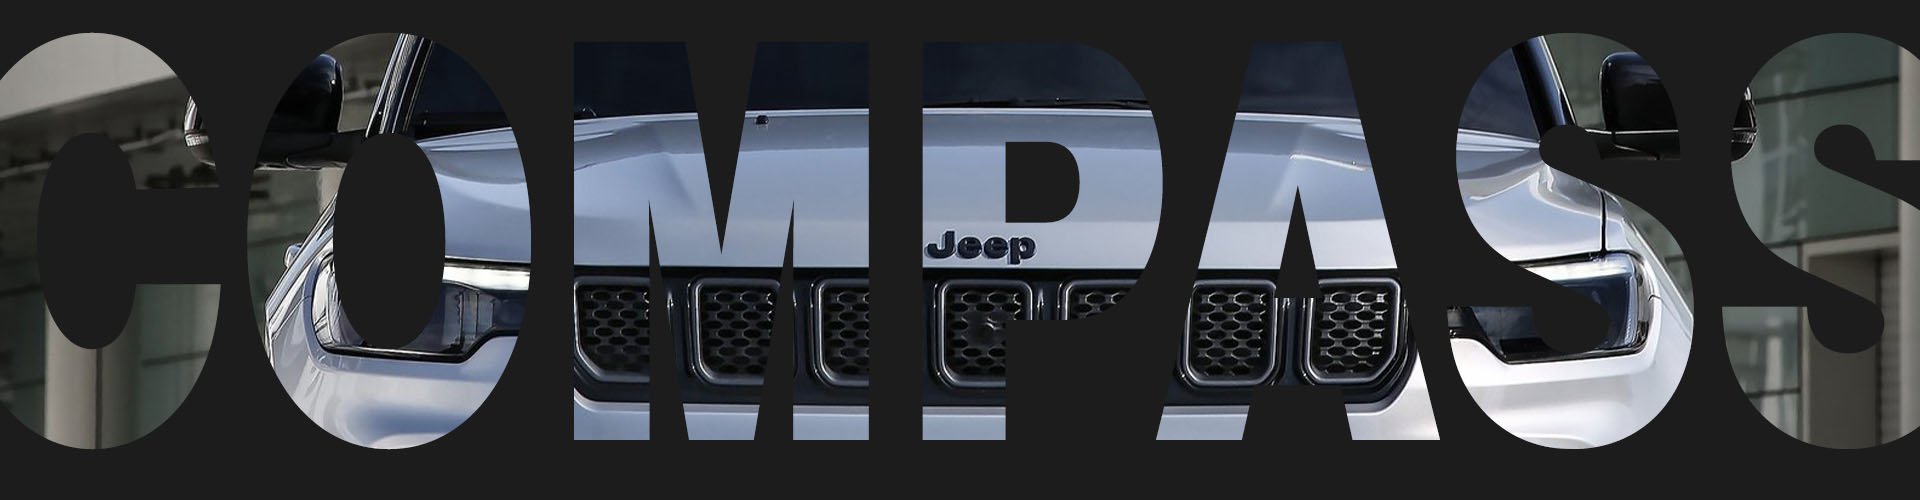 jeep compass